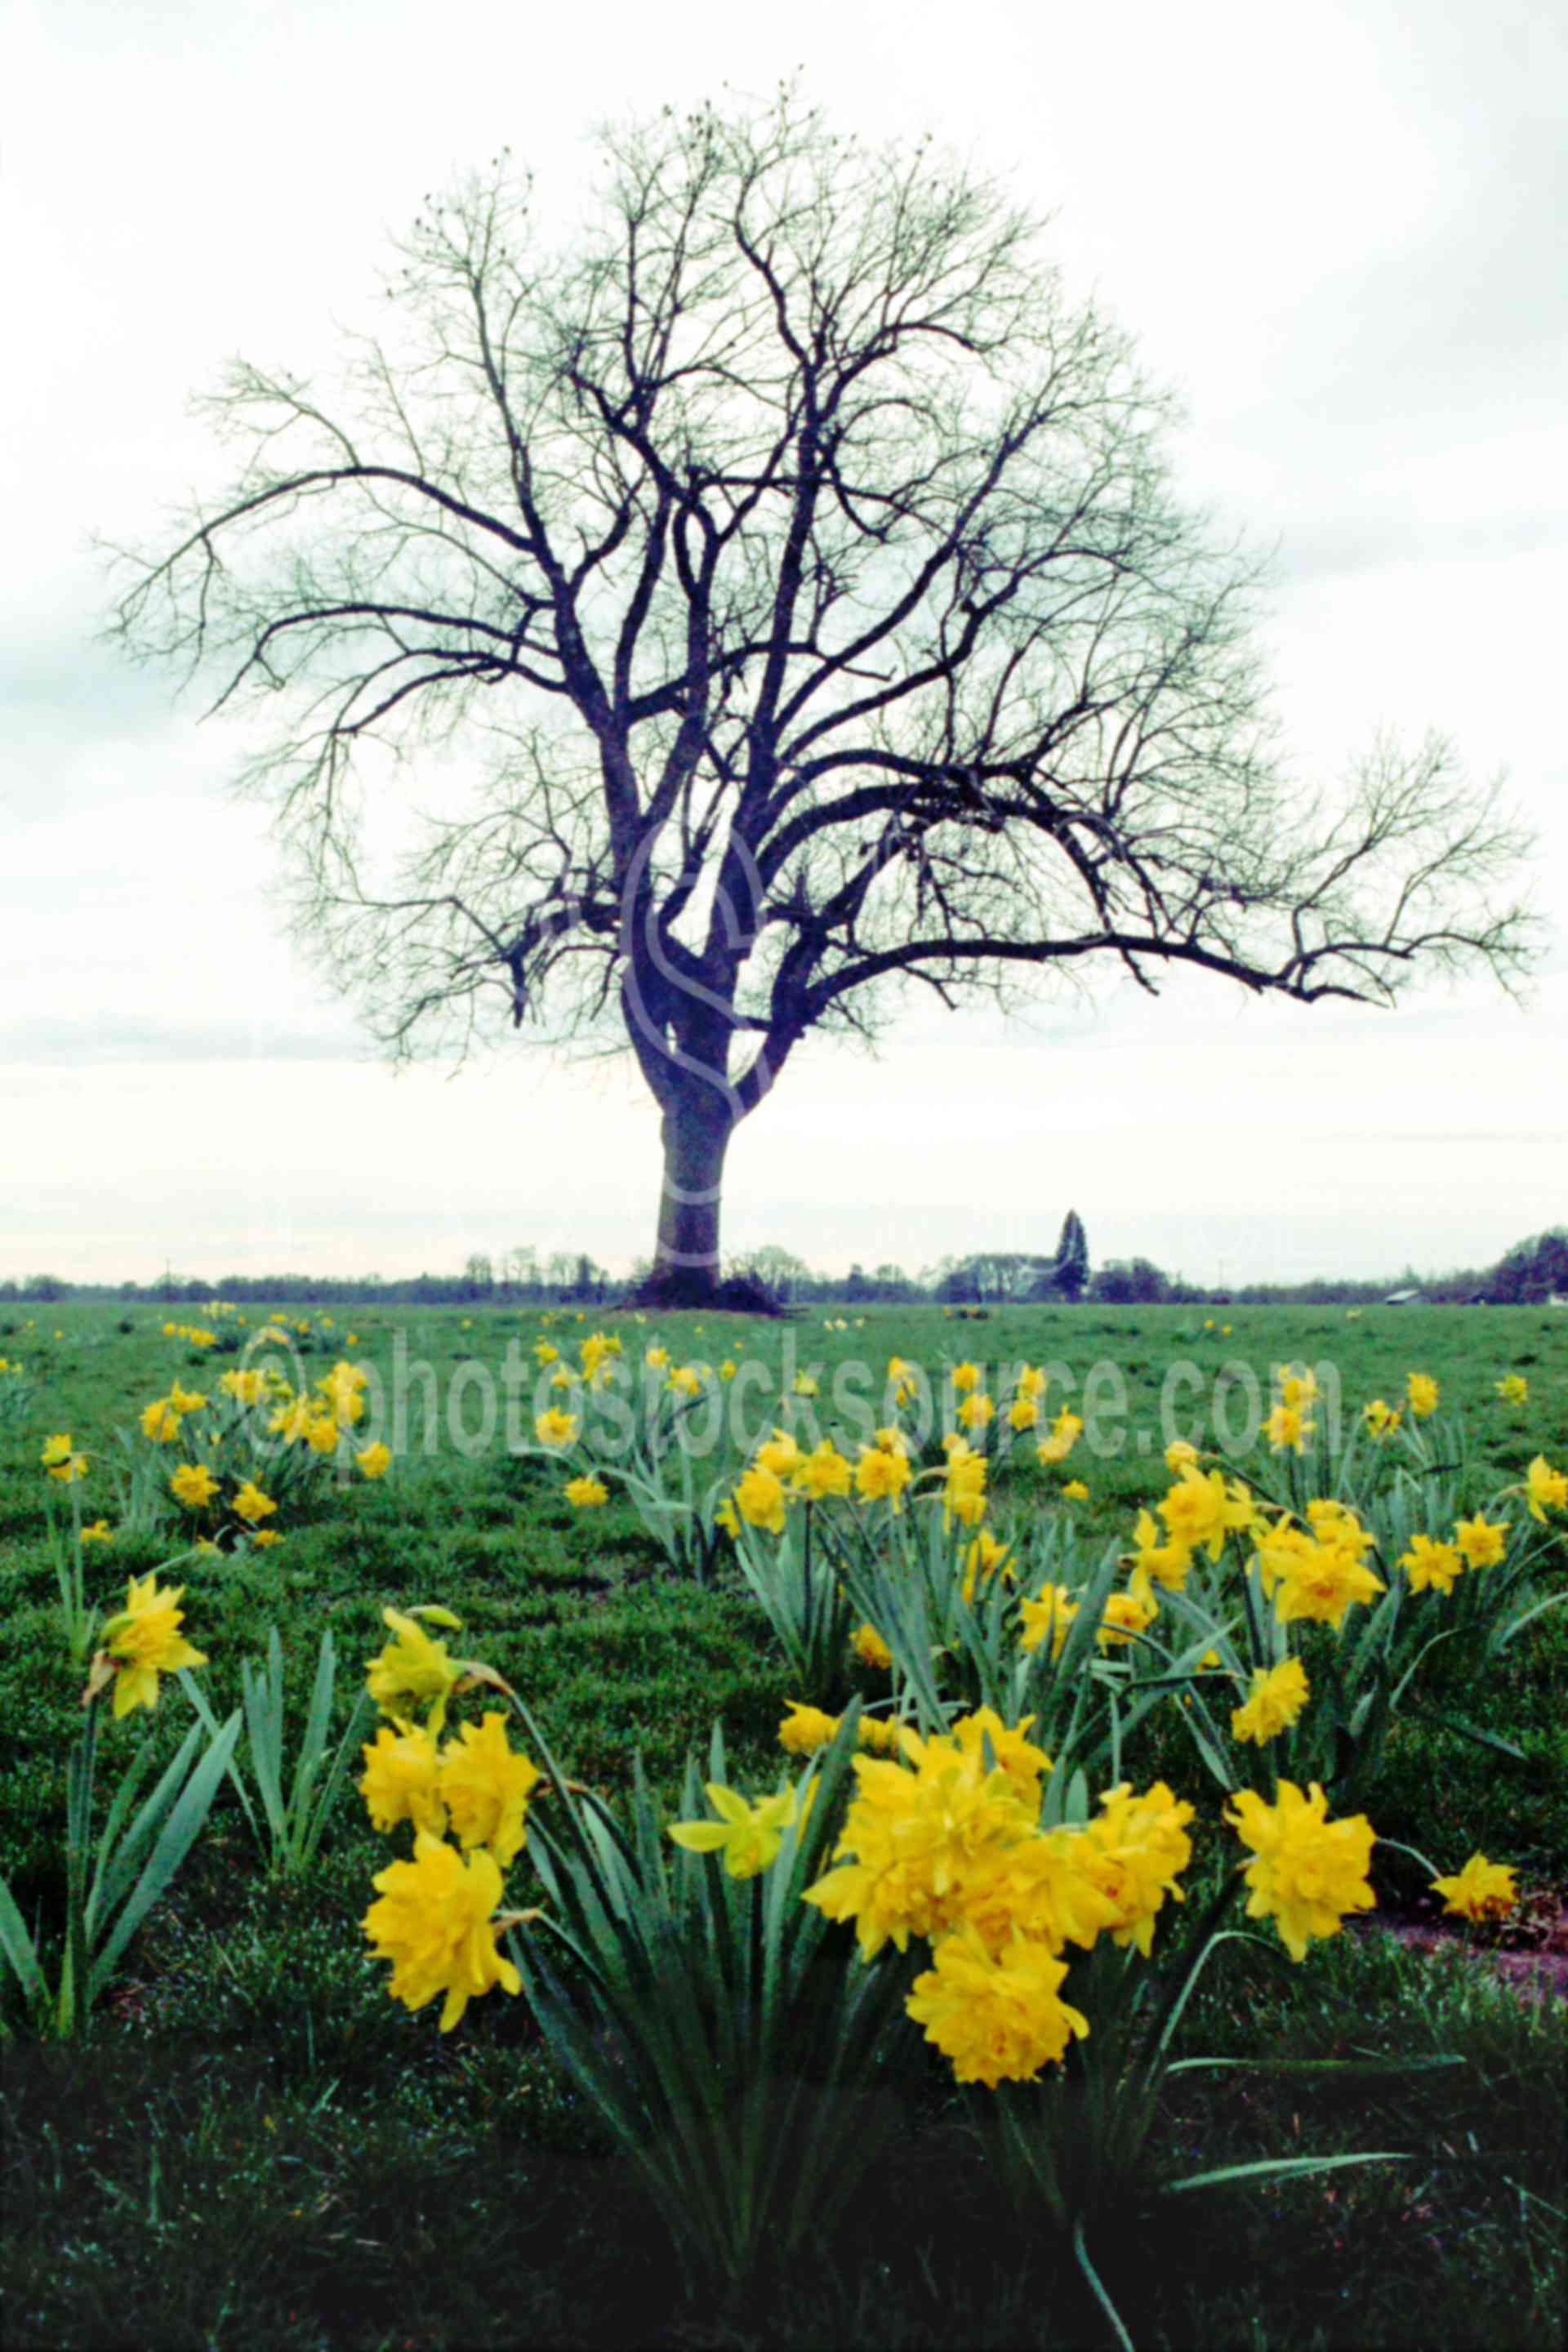 Tree and Daffodils,daffodil,field,tree,spring,plants,flowers